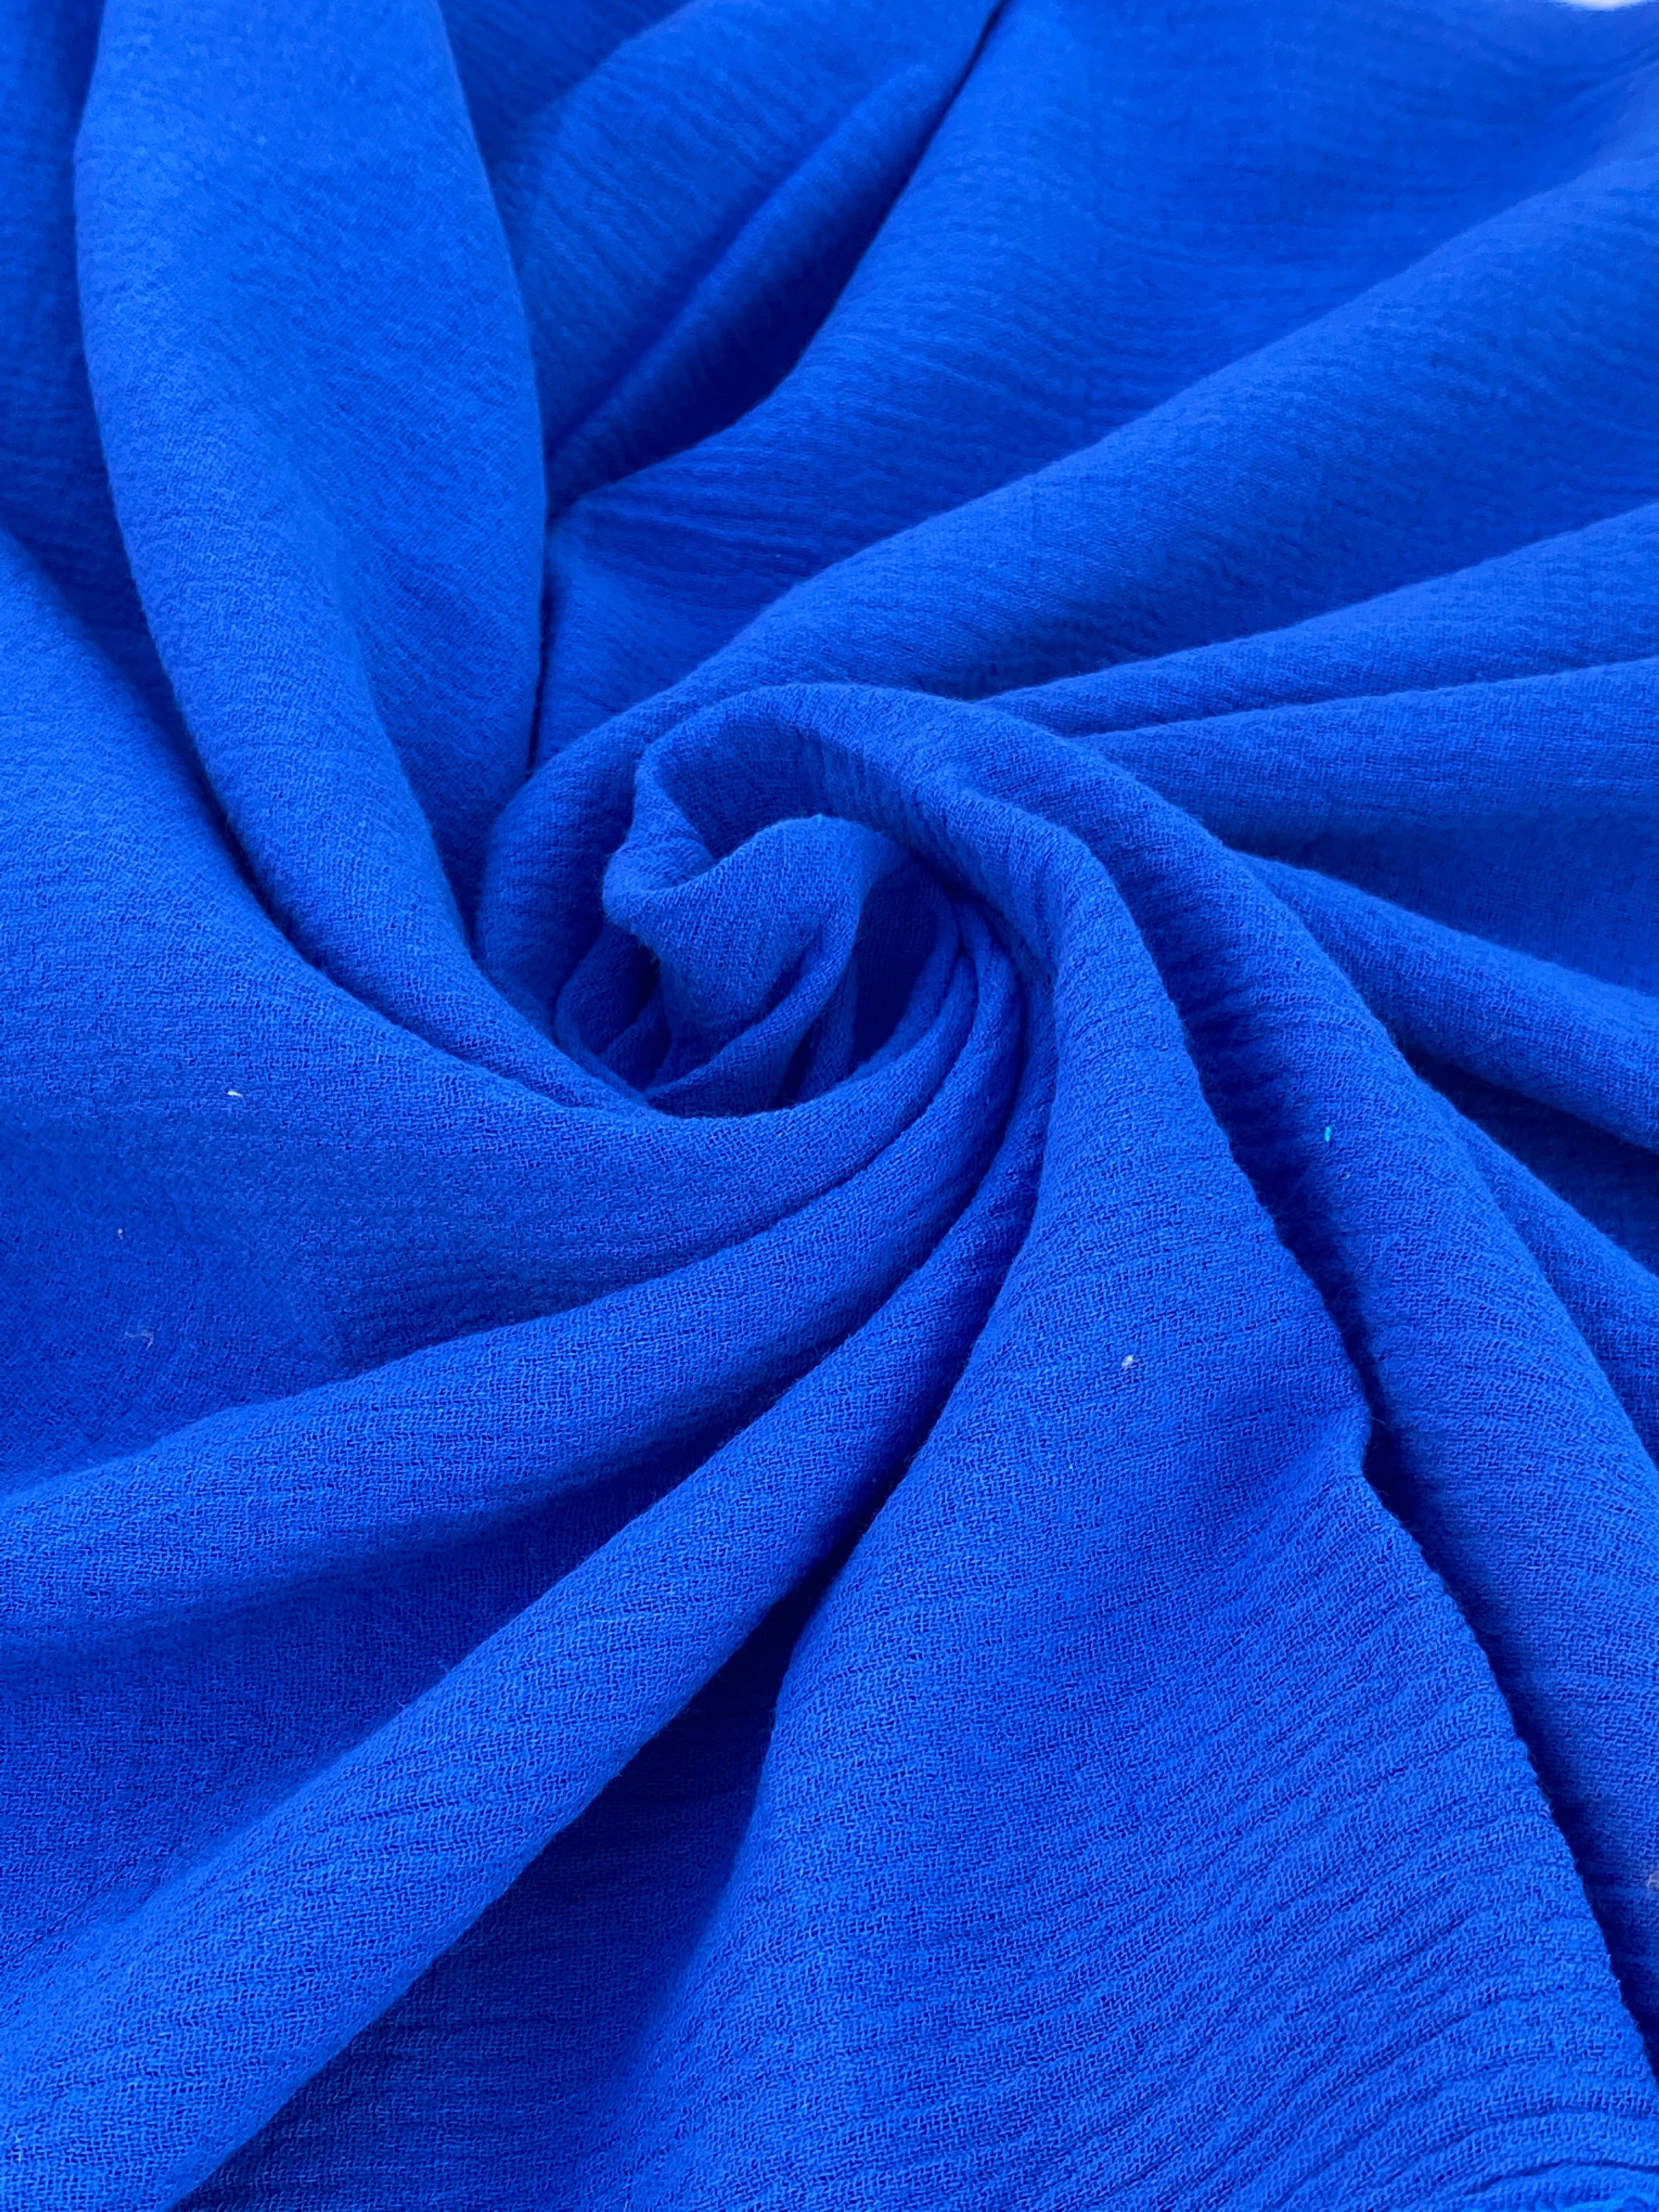 royal blue cotton gauze, cotton gauze fabric, blue gauze fabric, electric blue gauze, royal blue cotton by the yard, double gauze royal blue